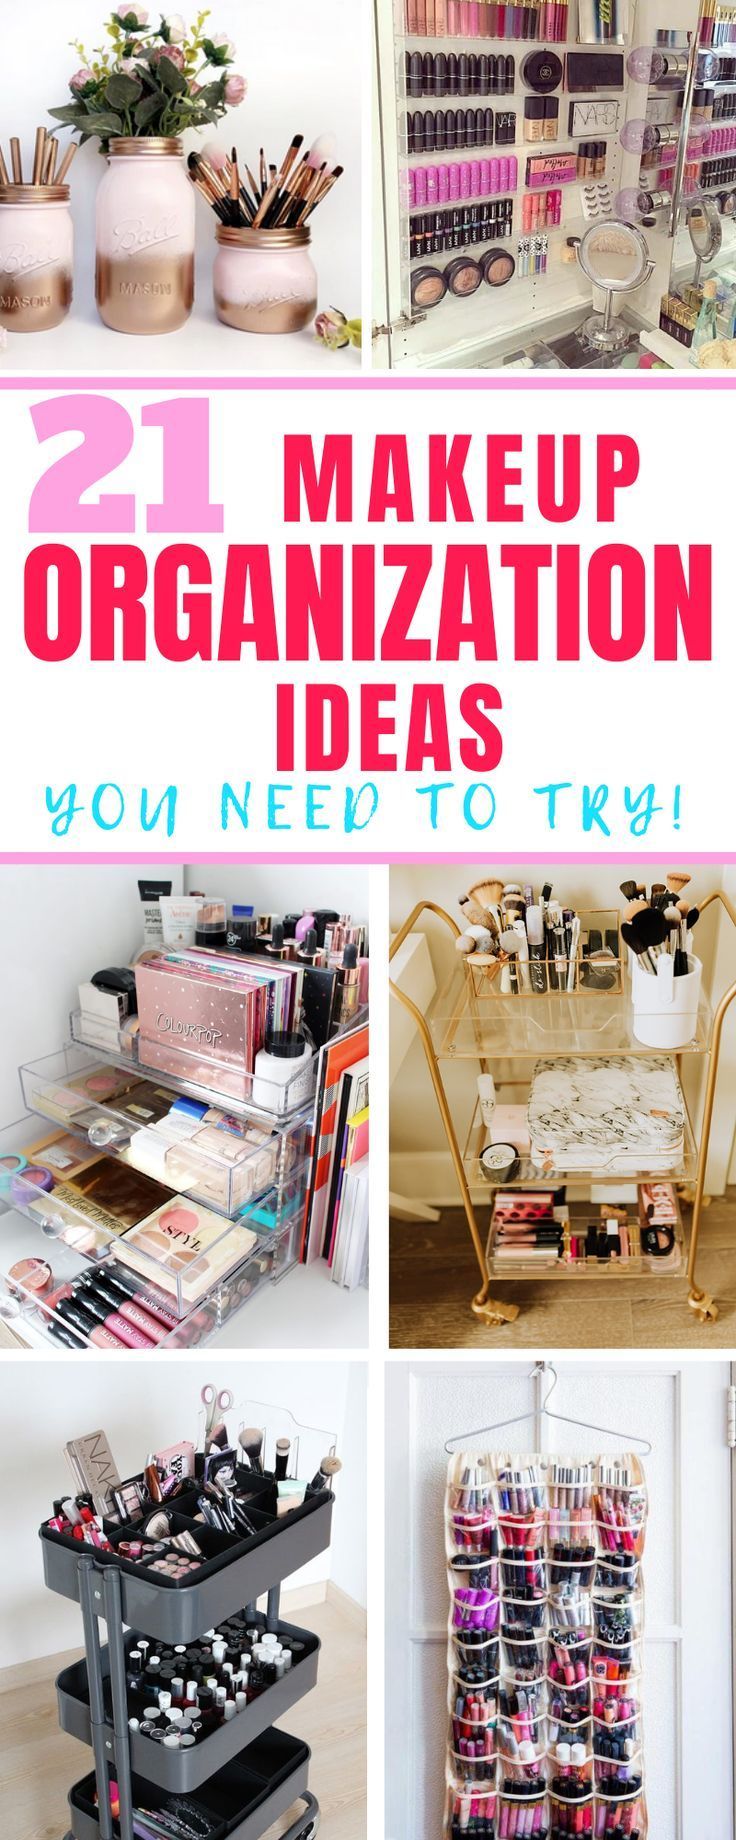 21 Creative Makeup Organization Ideas to Declutter Your Space - 21 Creative Makeup Organization Ideas to Declutter Your Space -   18 diy Room organizers ideas